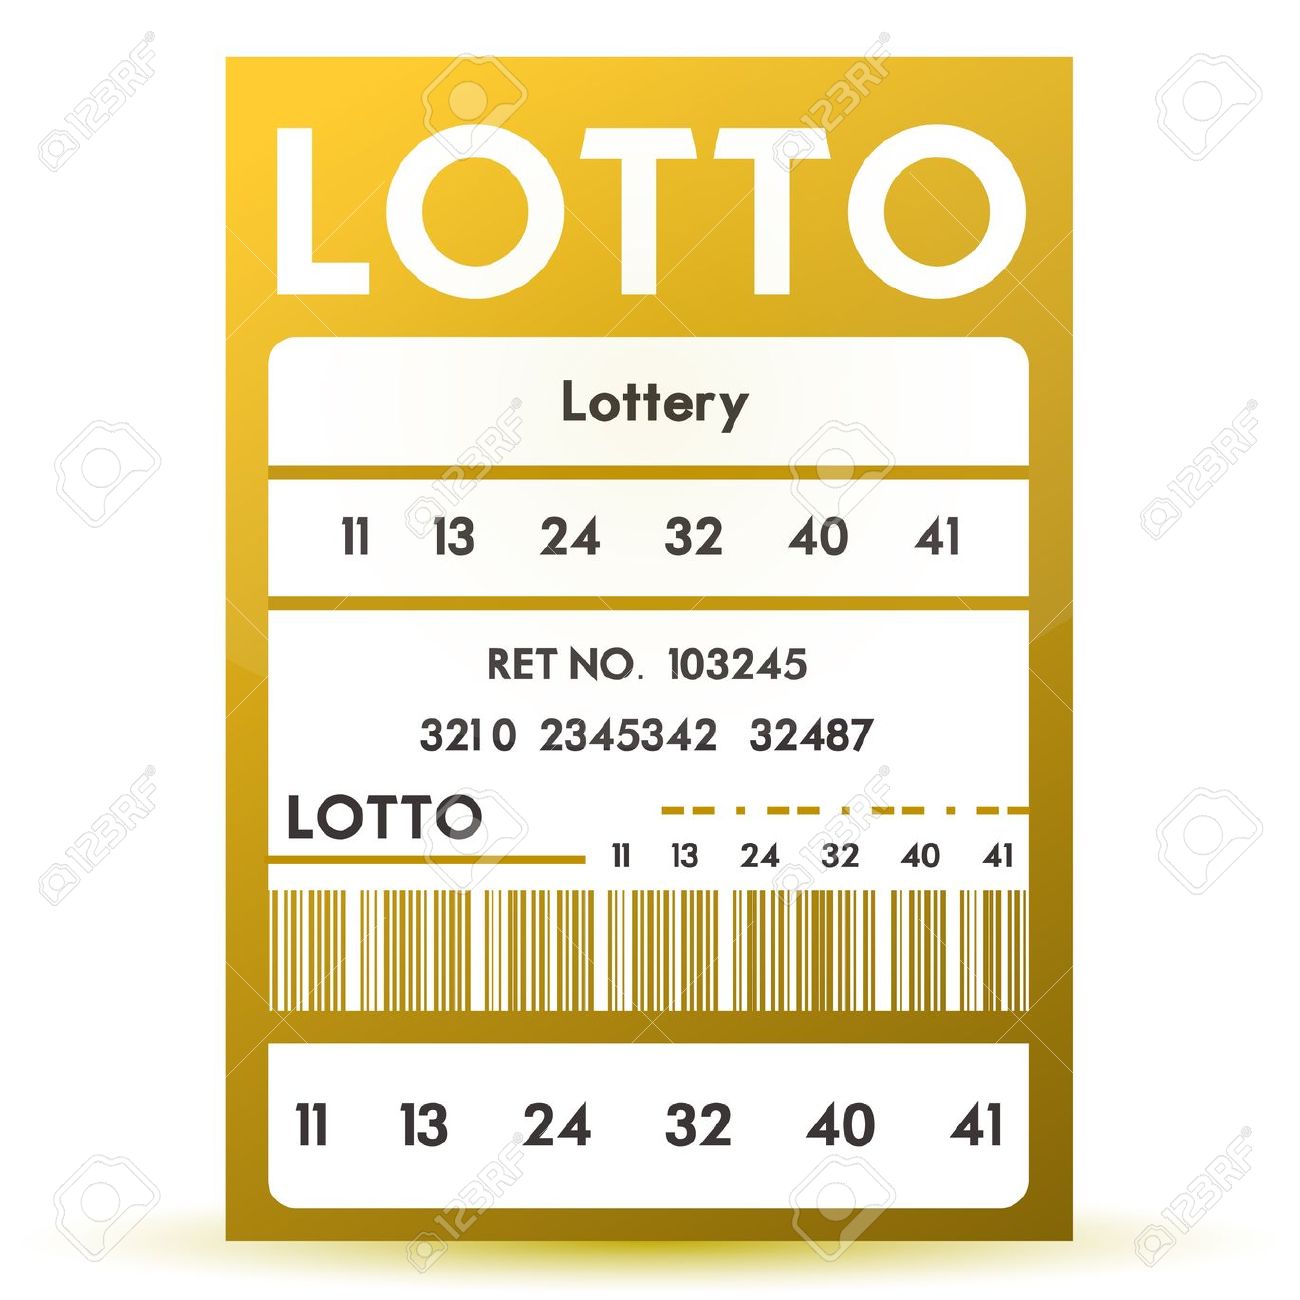 Lottery Ticket Stock Image Im